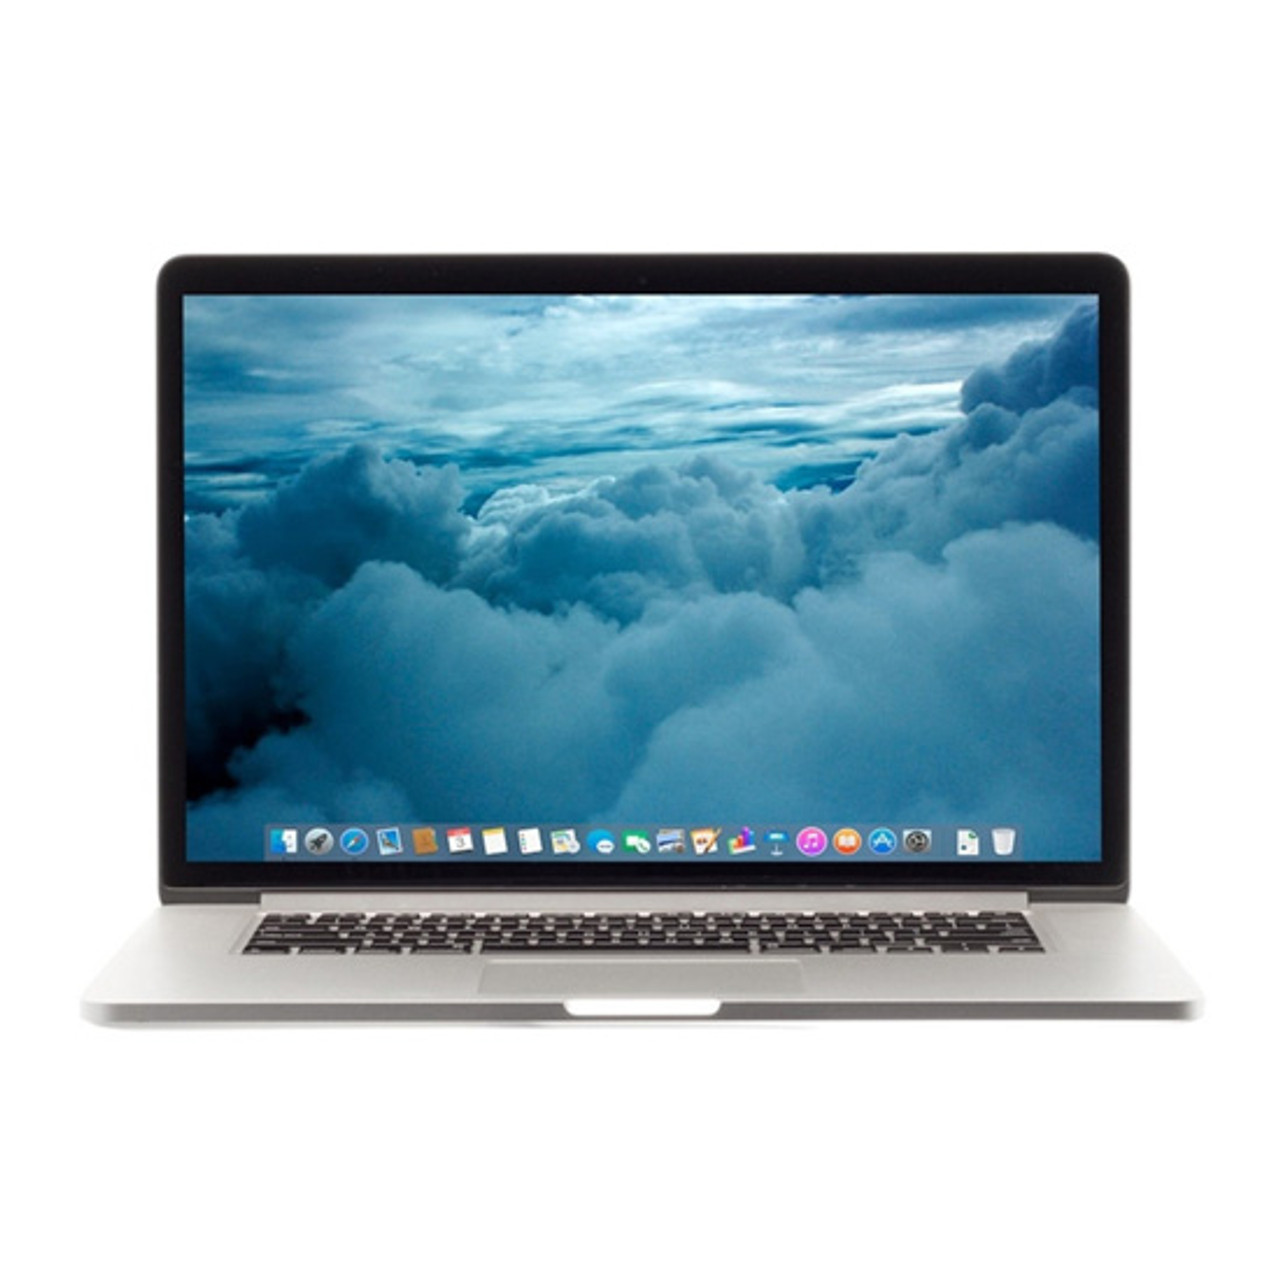 Apple MacBook Pro 15-inch 2.7GHz Quad-core i7 (Retina, Early 2013)